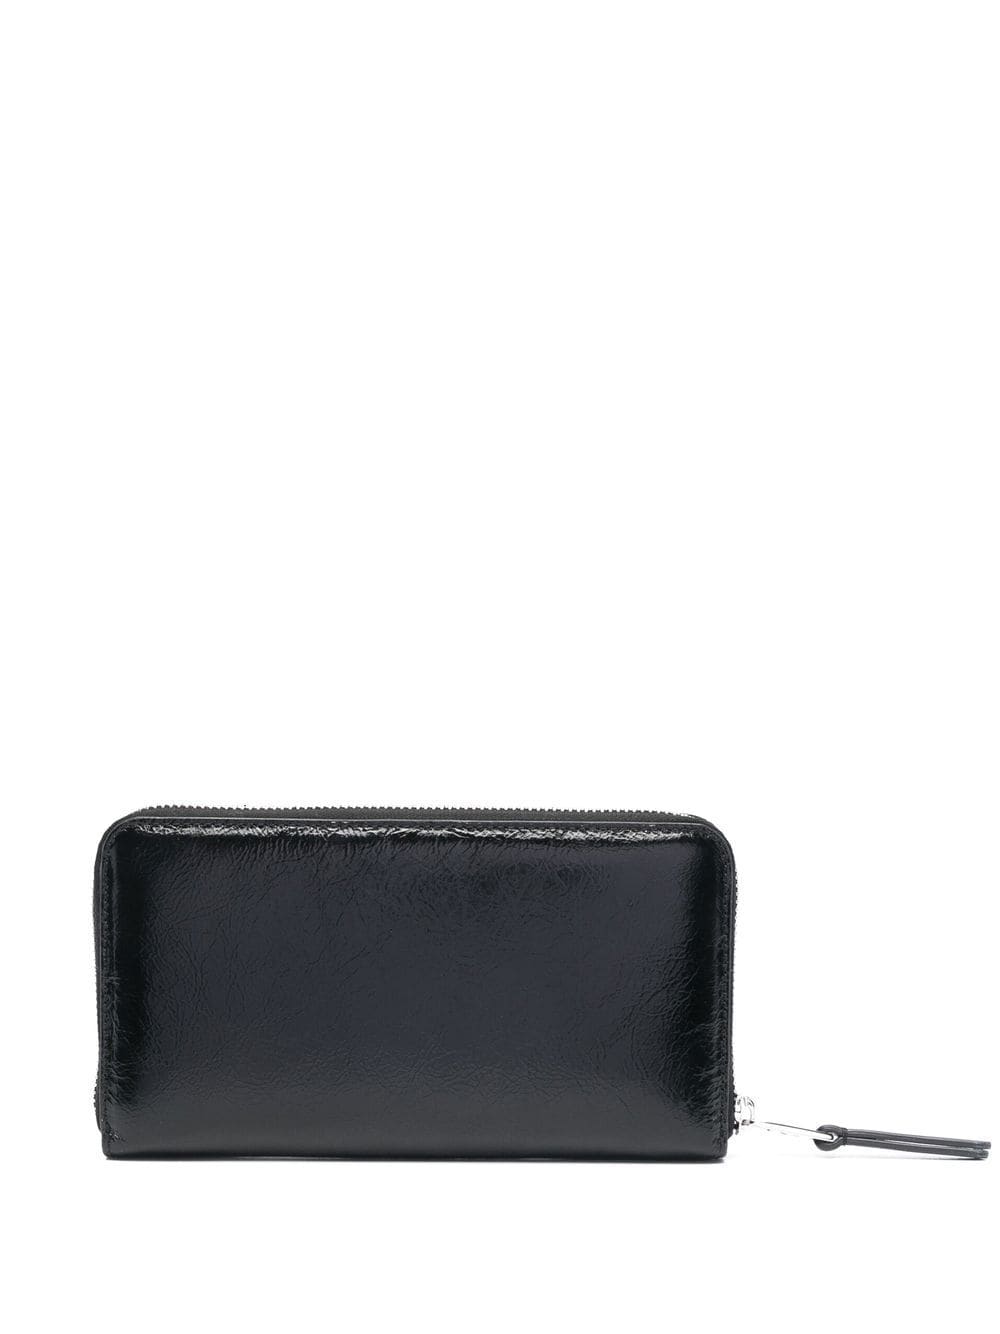 Image 2 of Karl Lagerfeld Signature Soft purse